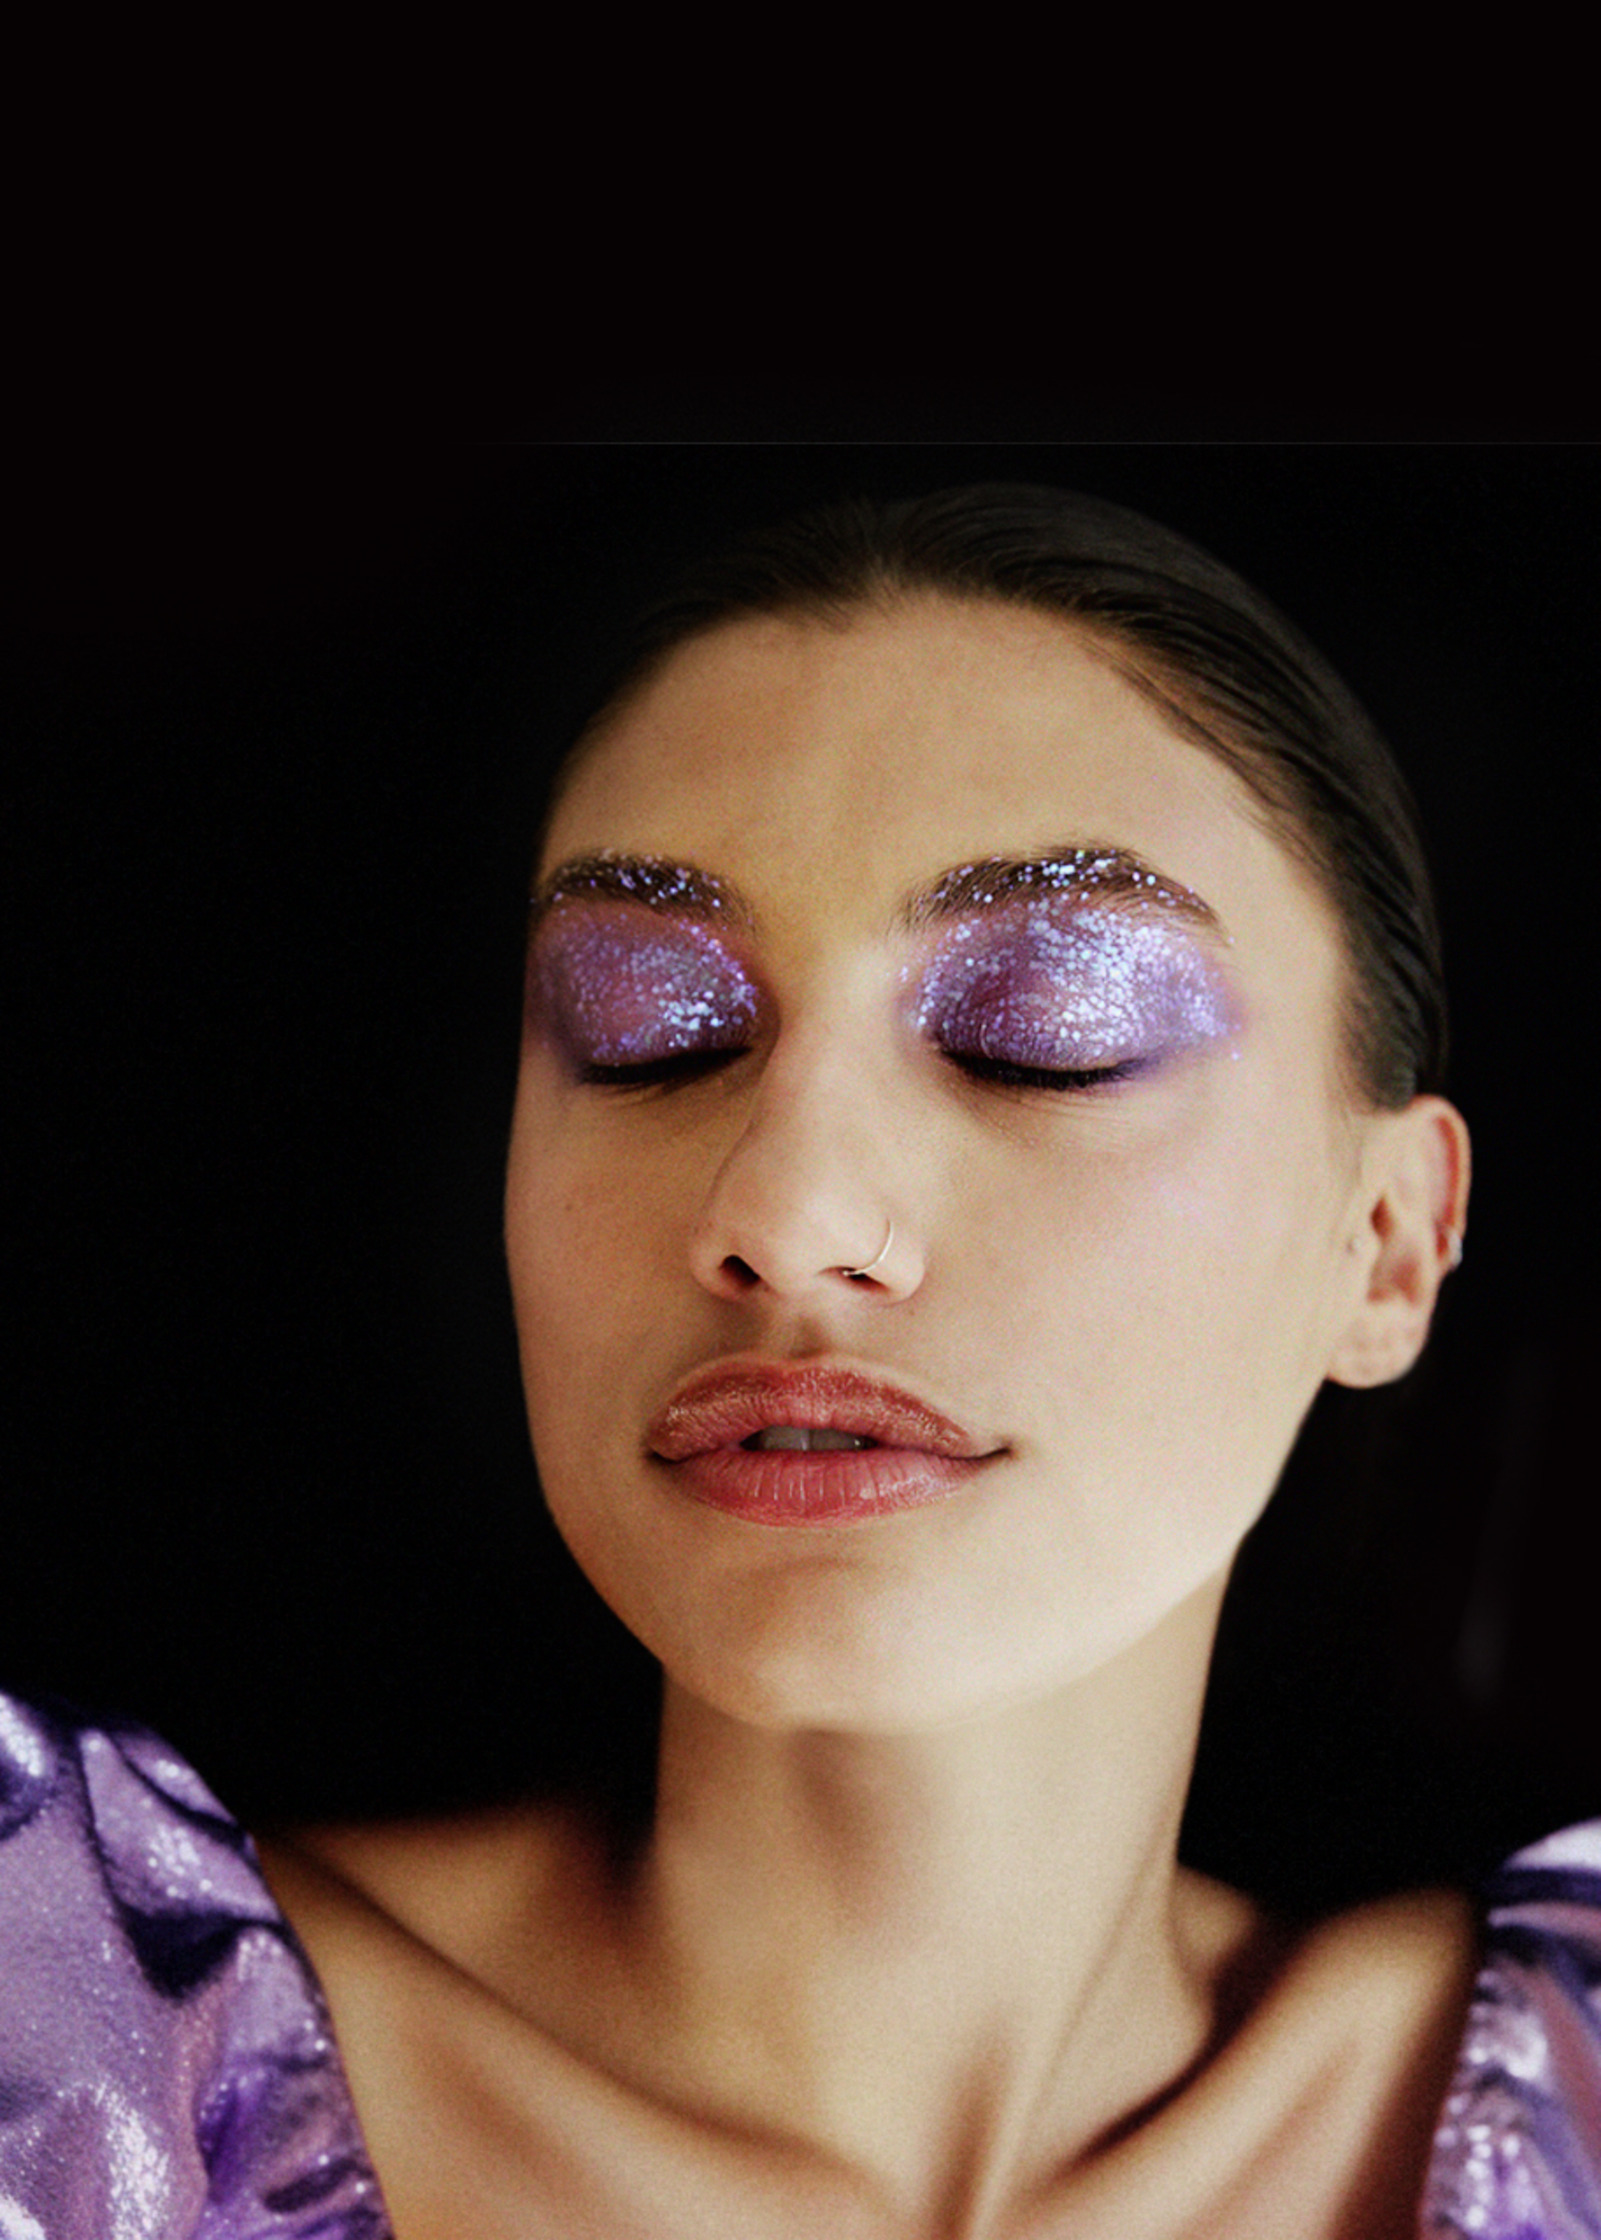 a woman in a purple dress with purple eye makeup